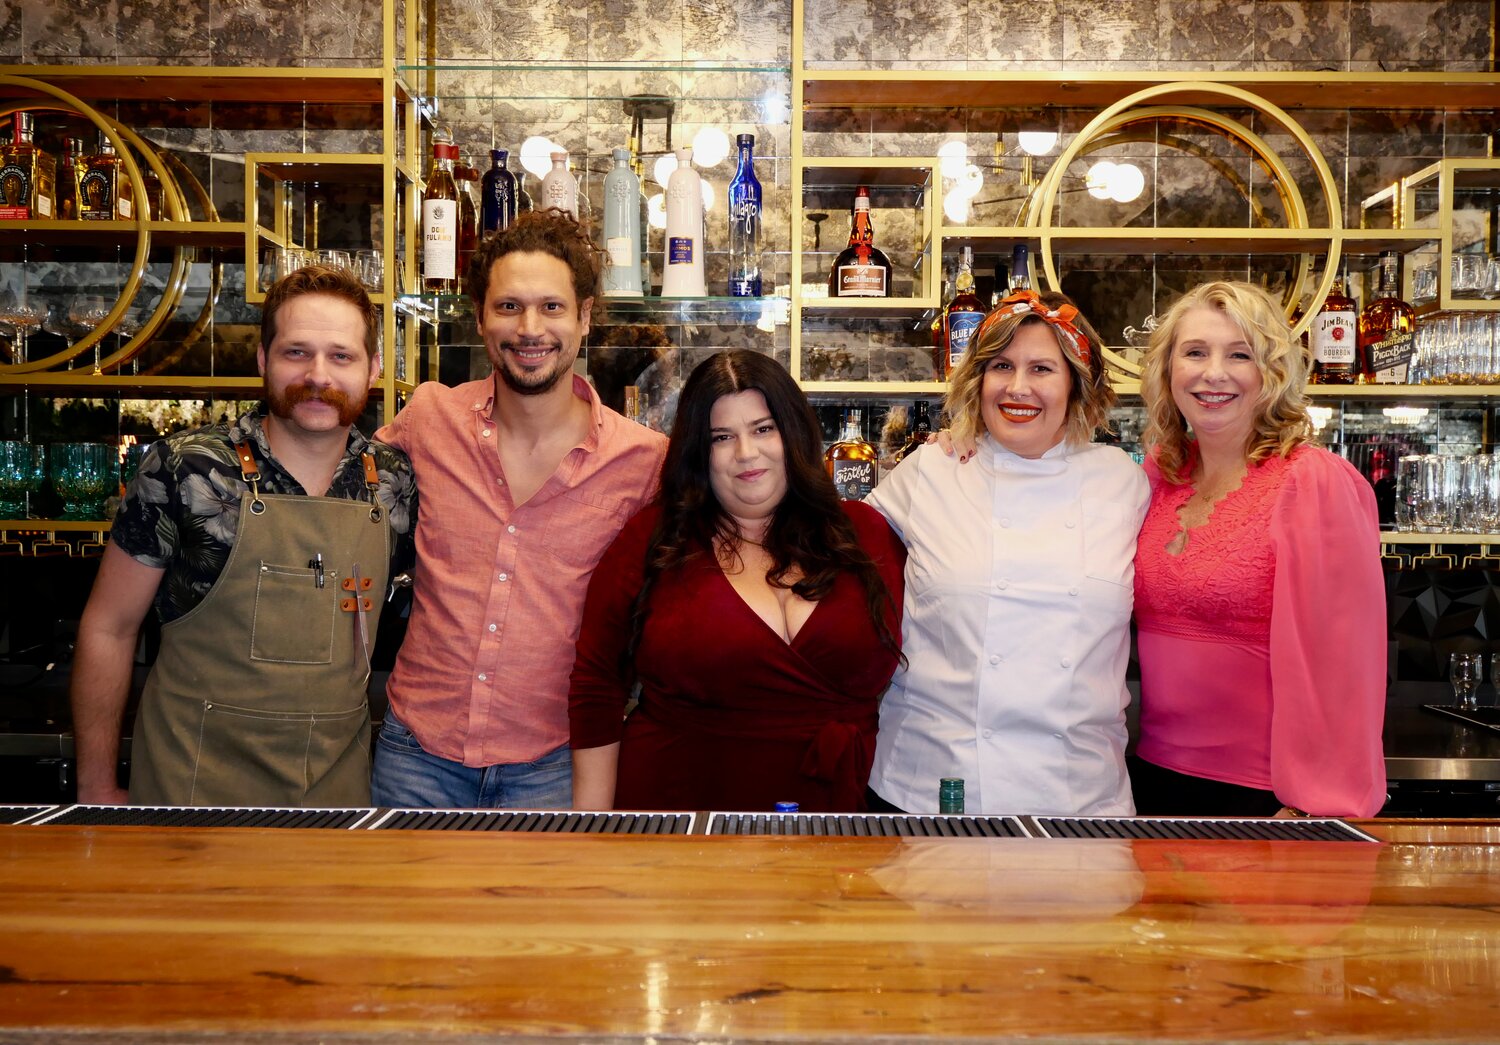 Pictured from left, Beverage Director Nick Hausman, Co-Owner Alberto “AJ” Cebollero, Co-Owner Jeanetta Cebollero, Chef Ellie Schultz and GM Heather Vasseur.